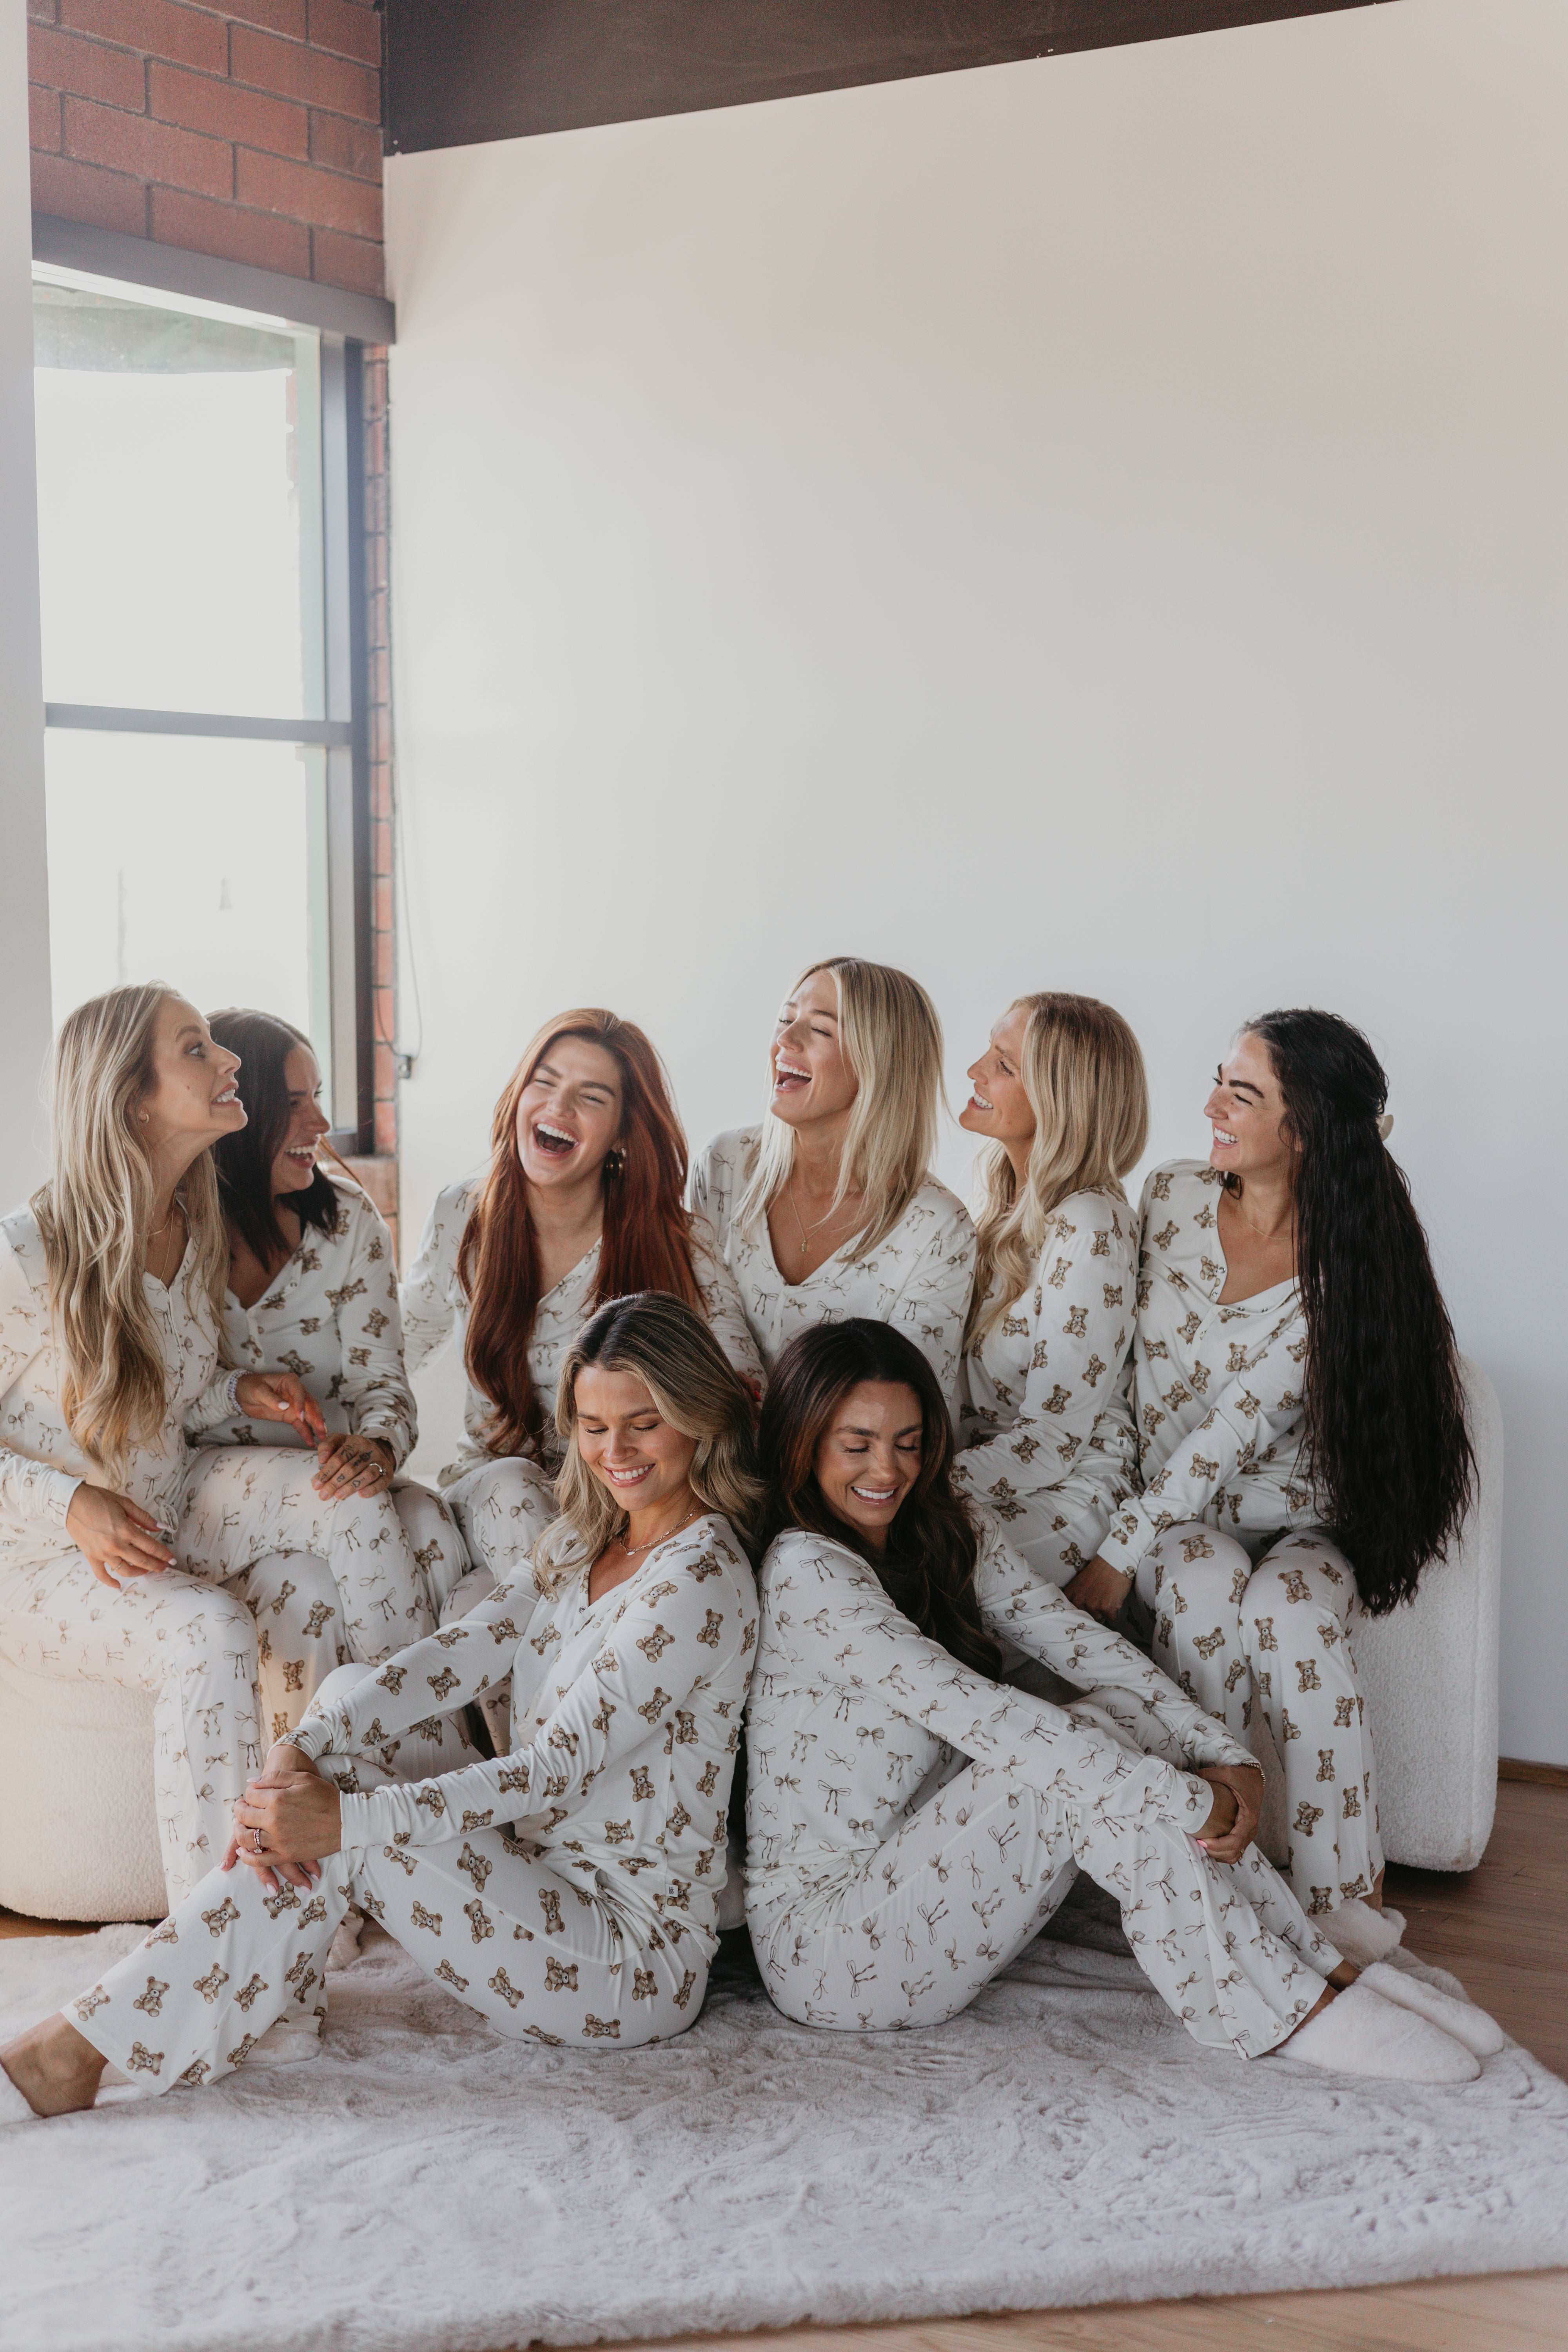 Kendy x FF Bears | 🧸  Women's Bamboo Pajamas